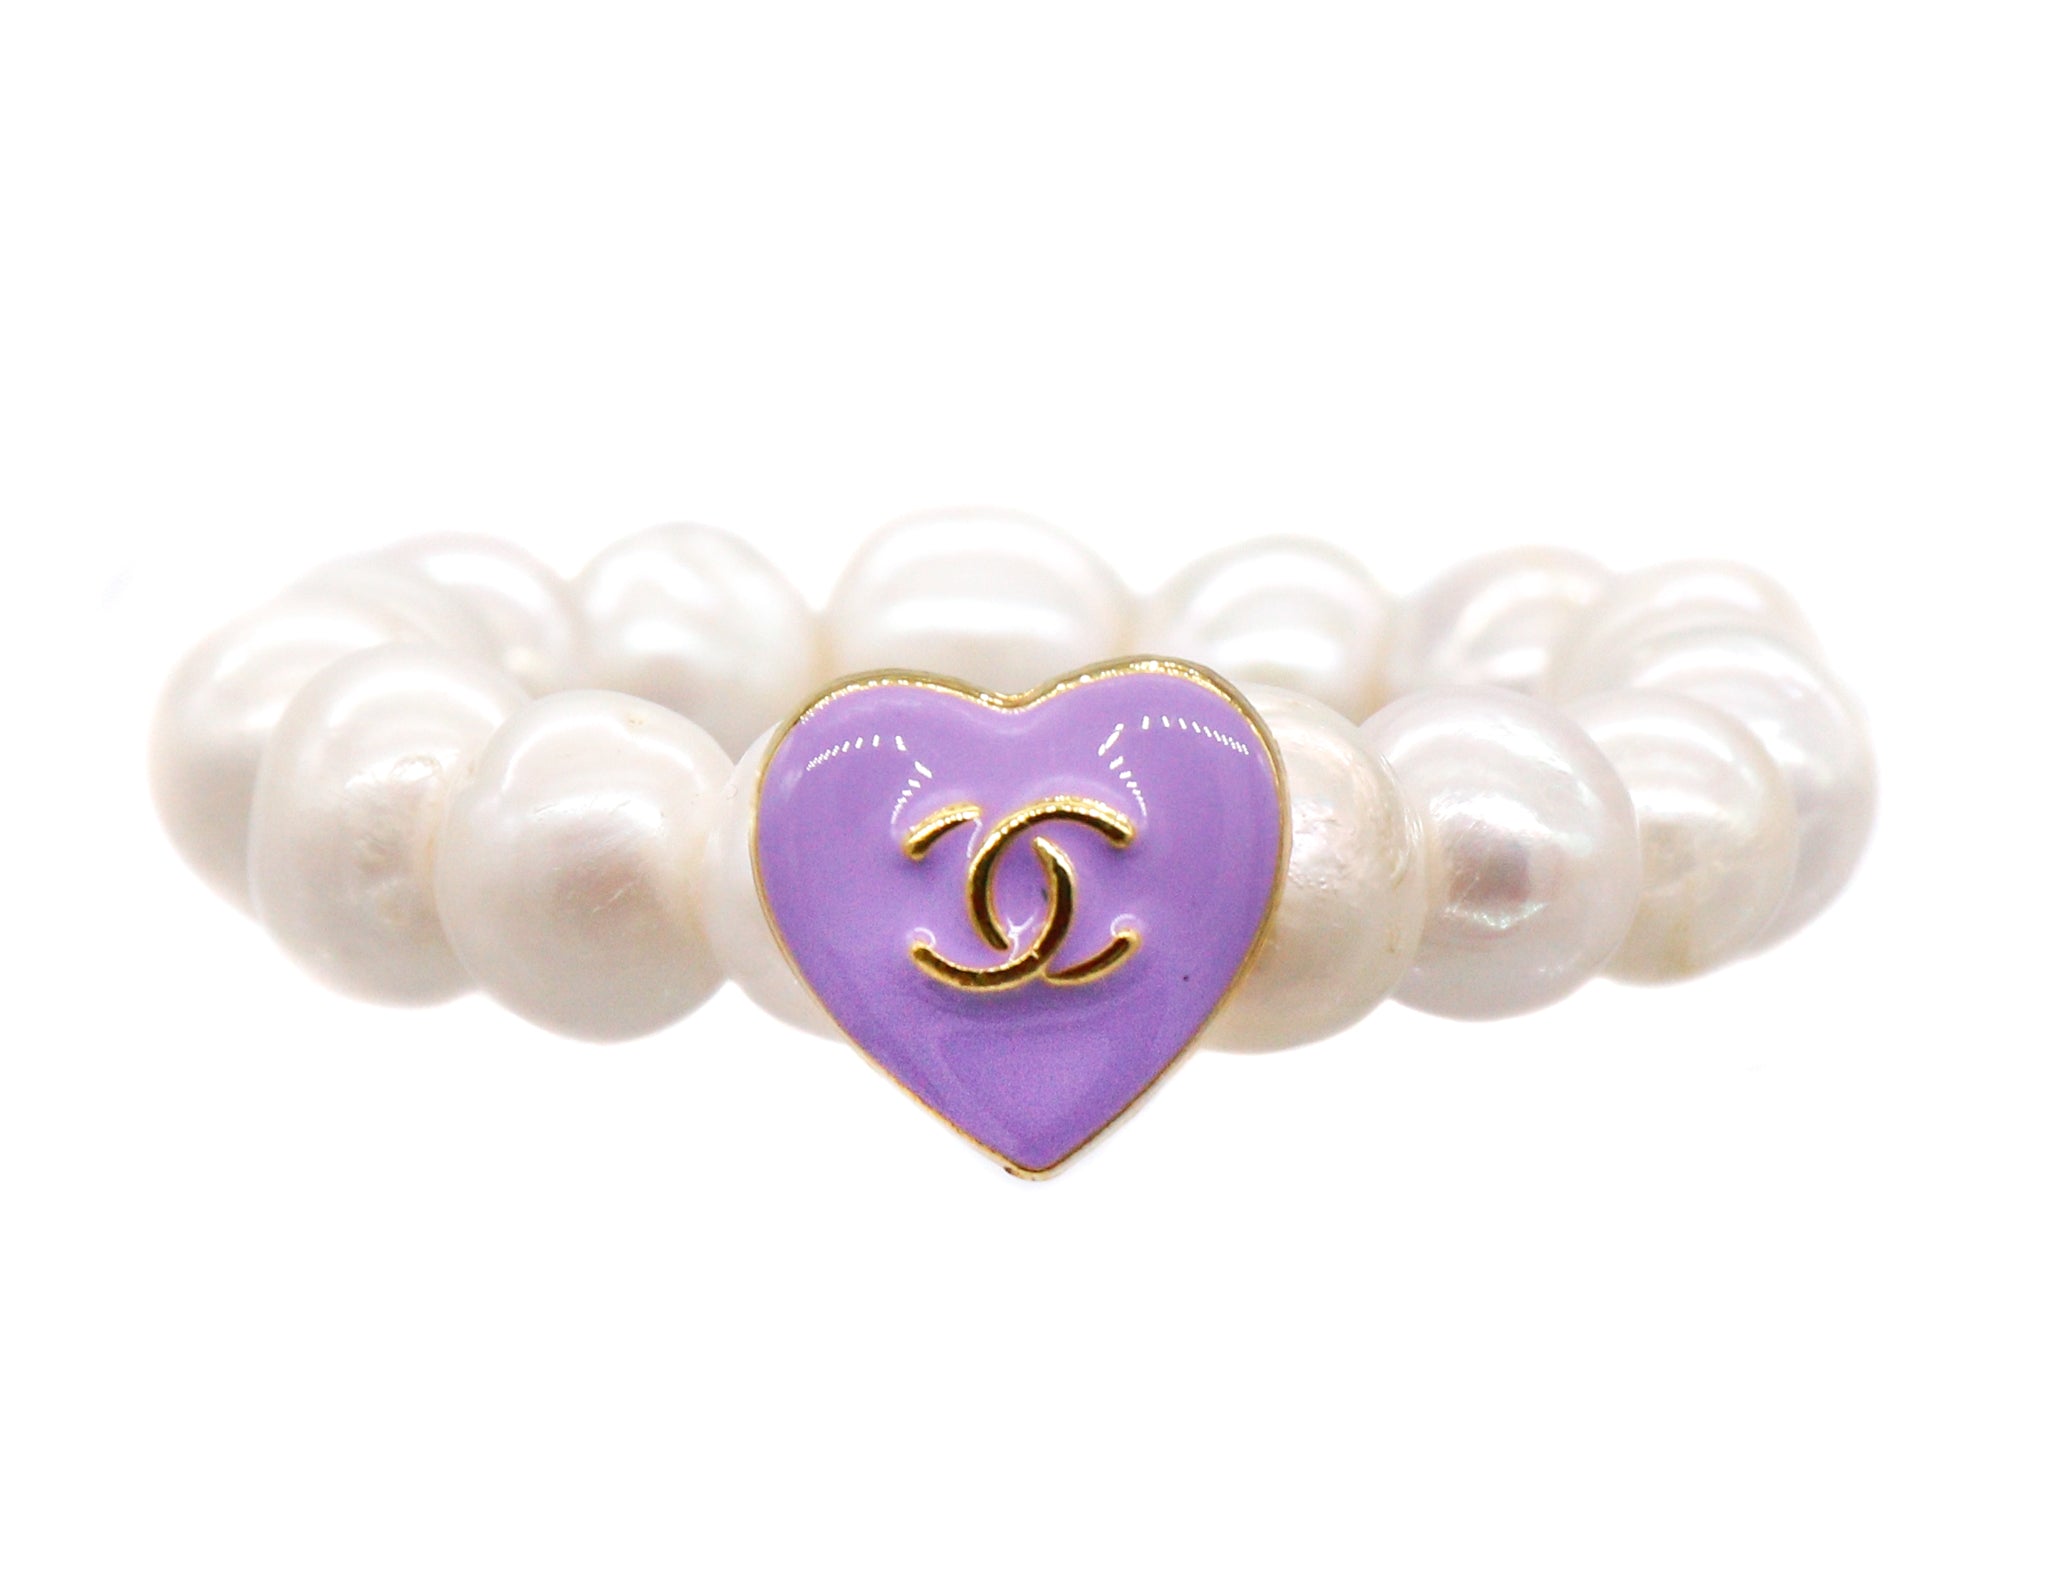 Freshwater pearl bracelet with a repurposed lavender designer heart